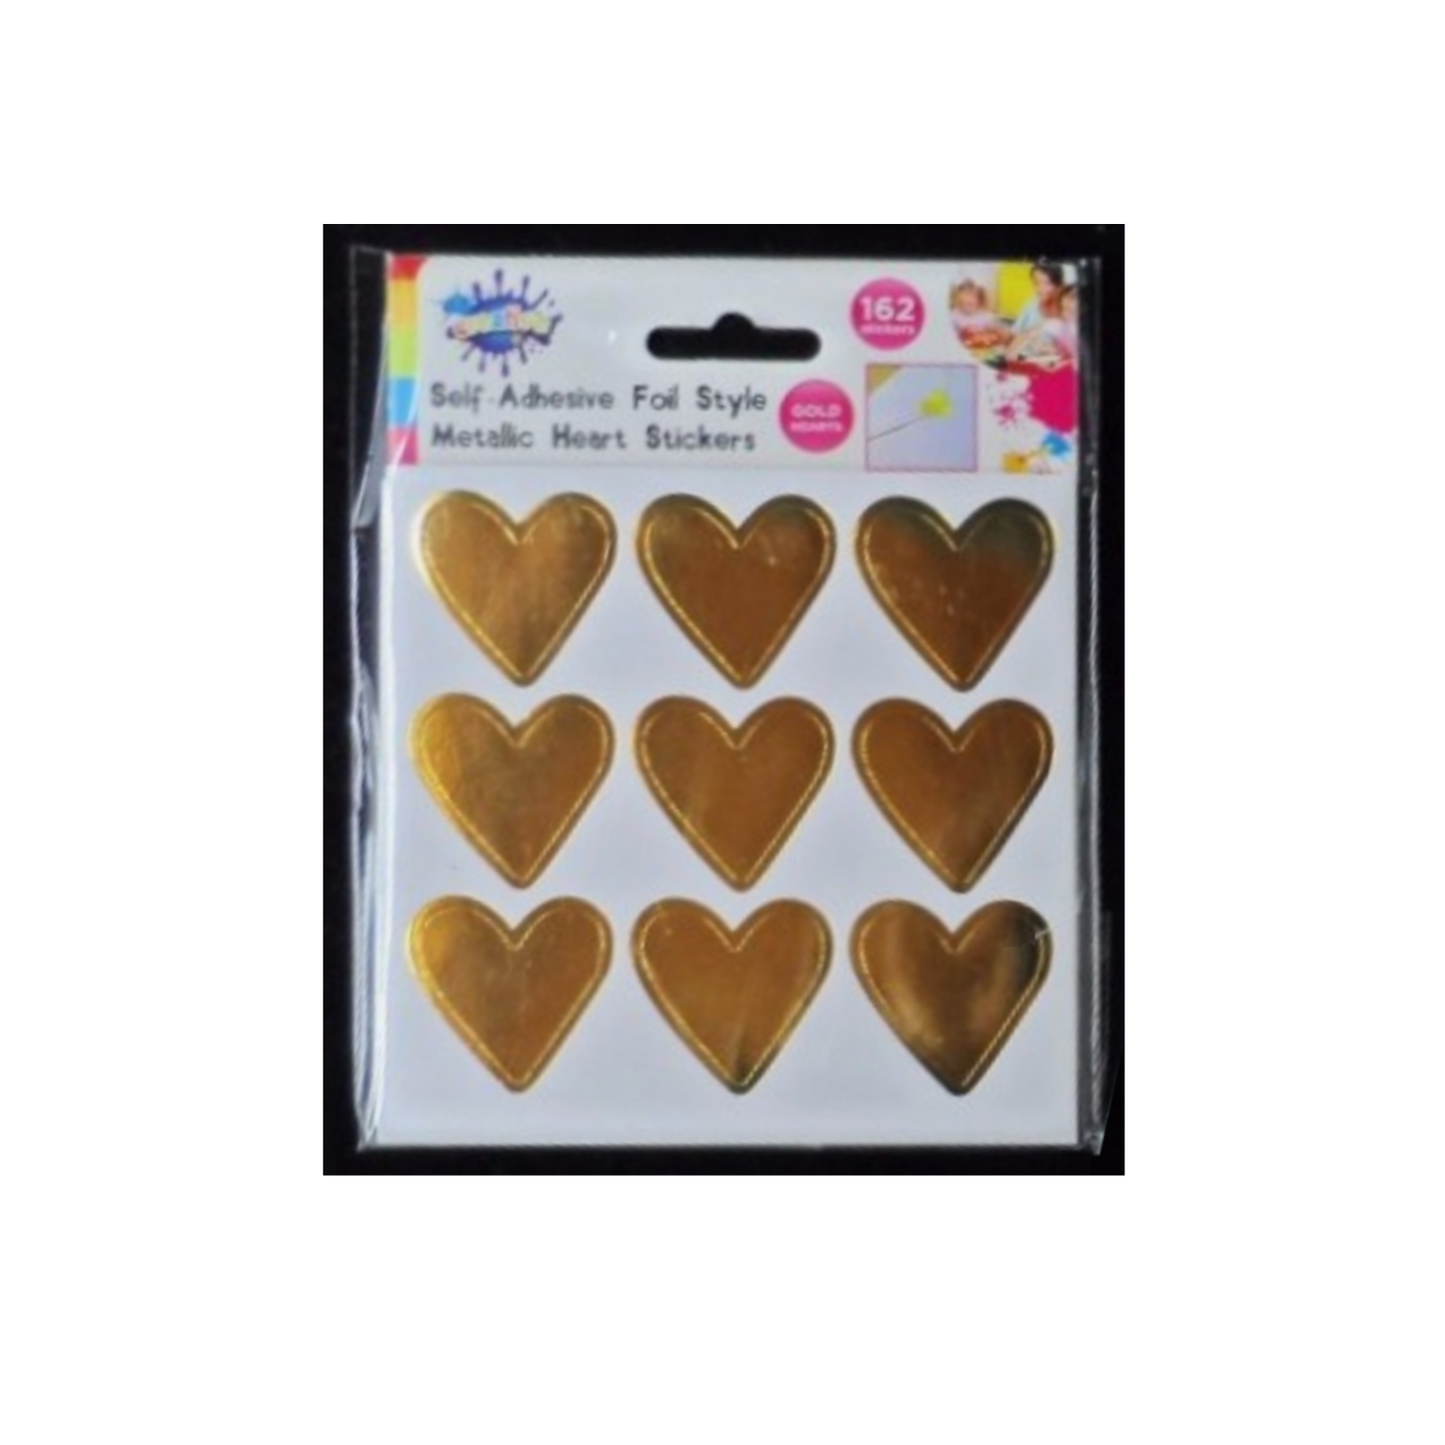 Sticker Gold Metallic Heart Sticker 162 Pack Self adhesive Foil Style